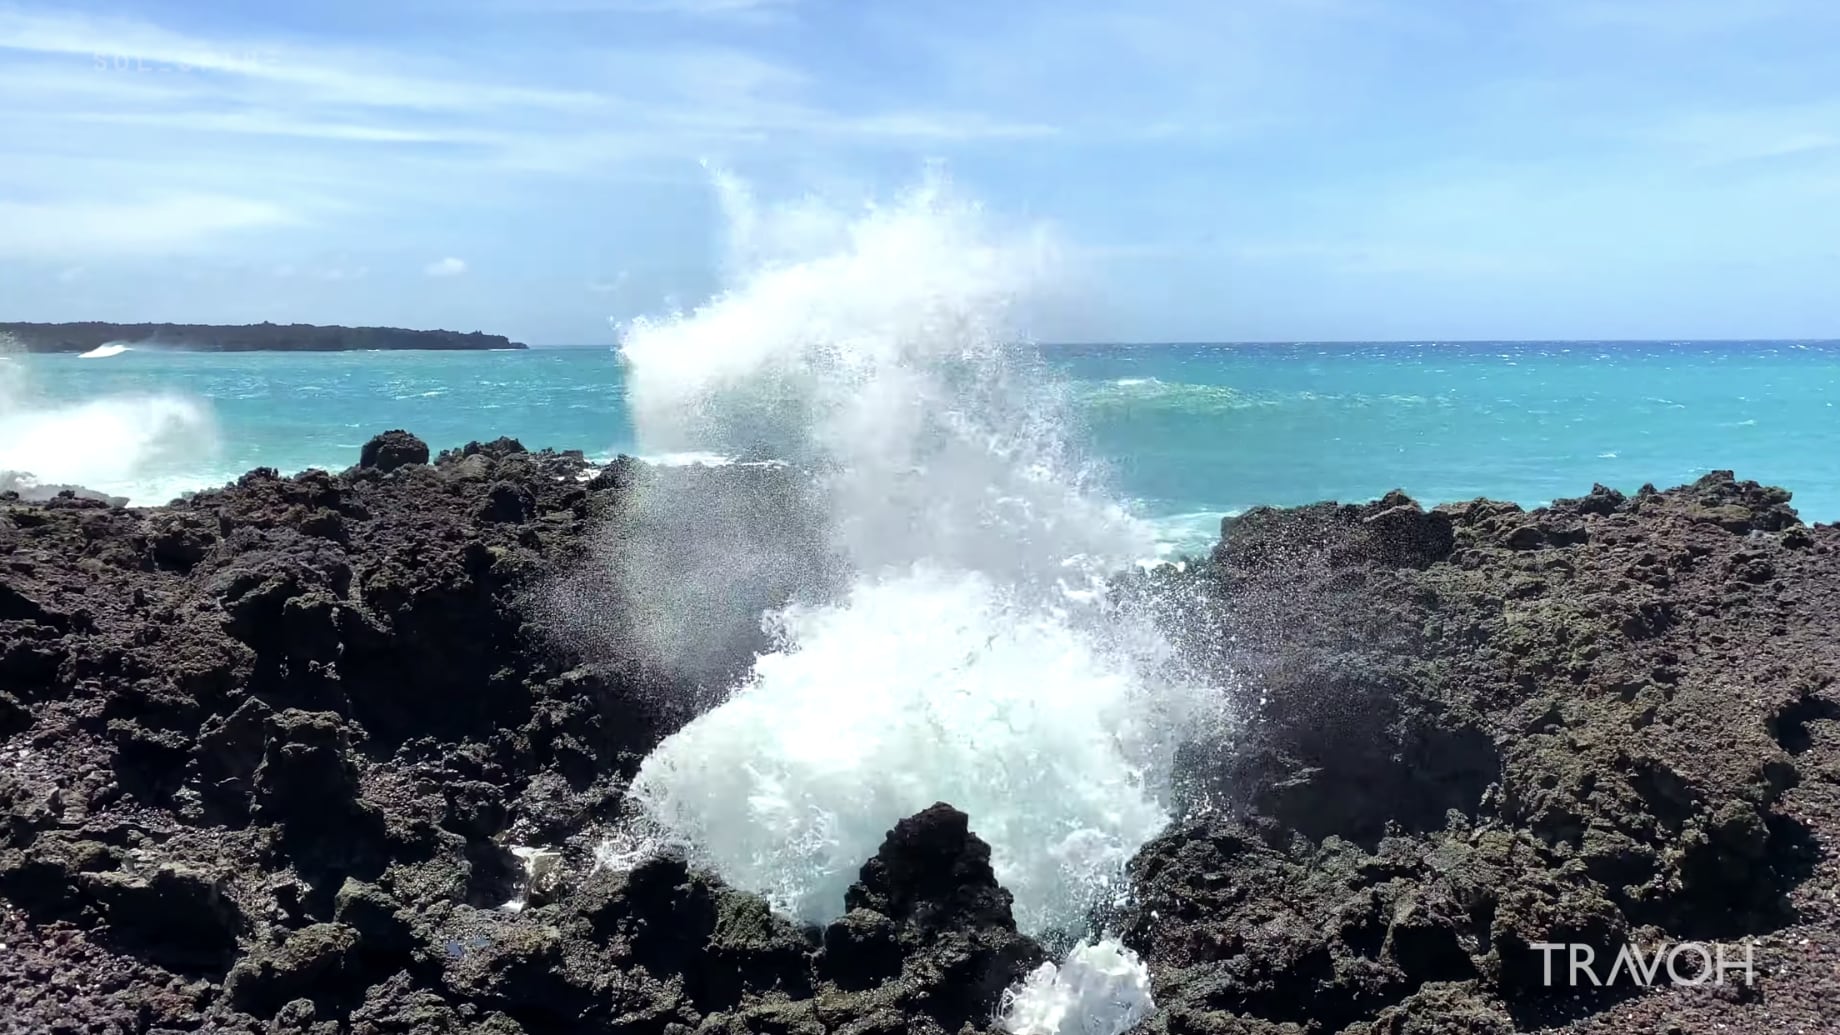 Waves Crashing - Pacific Ocean Sounds - Volcanic Rock Beach - Maui, Hawaii, USA - 4K Travel